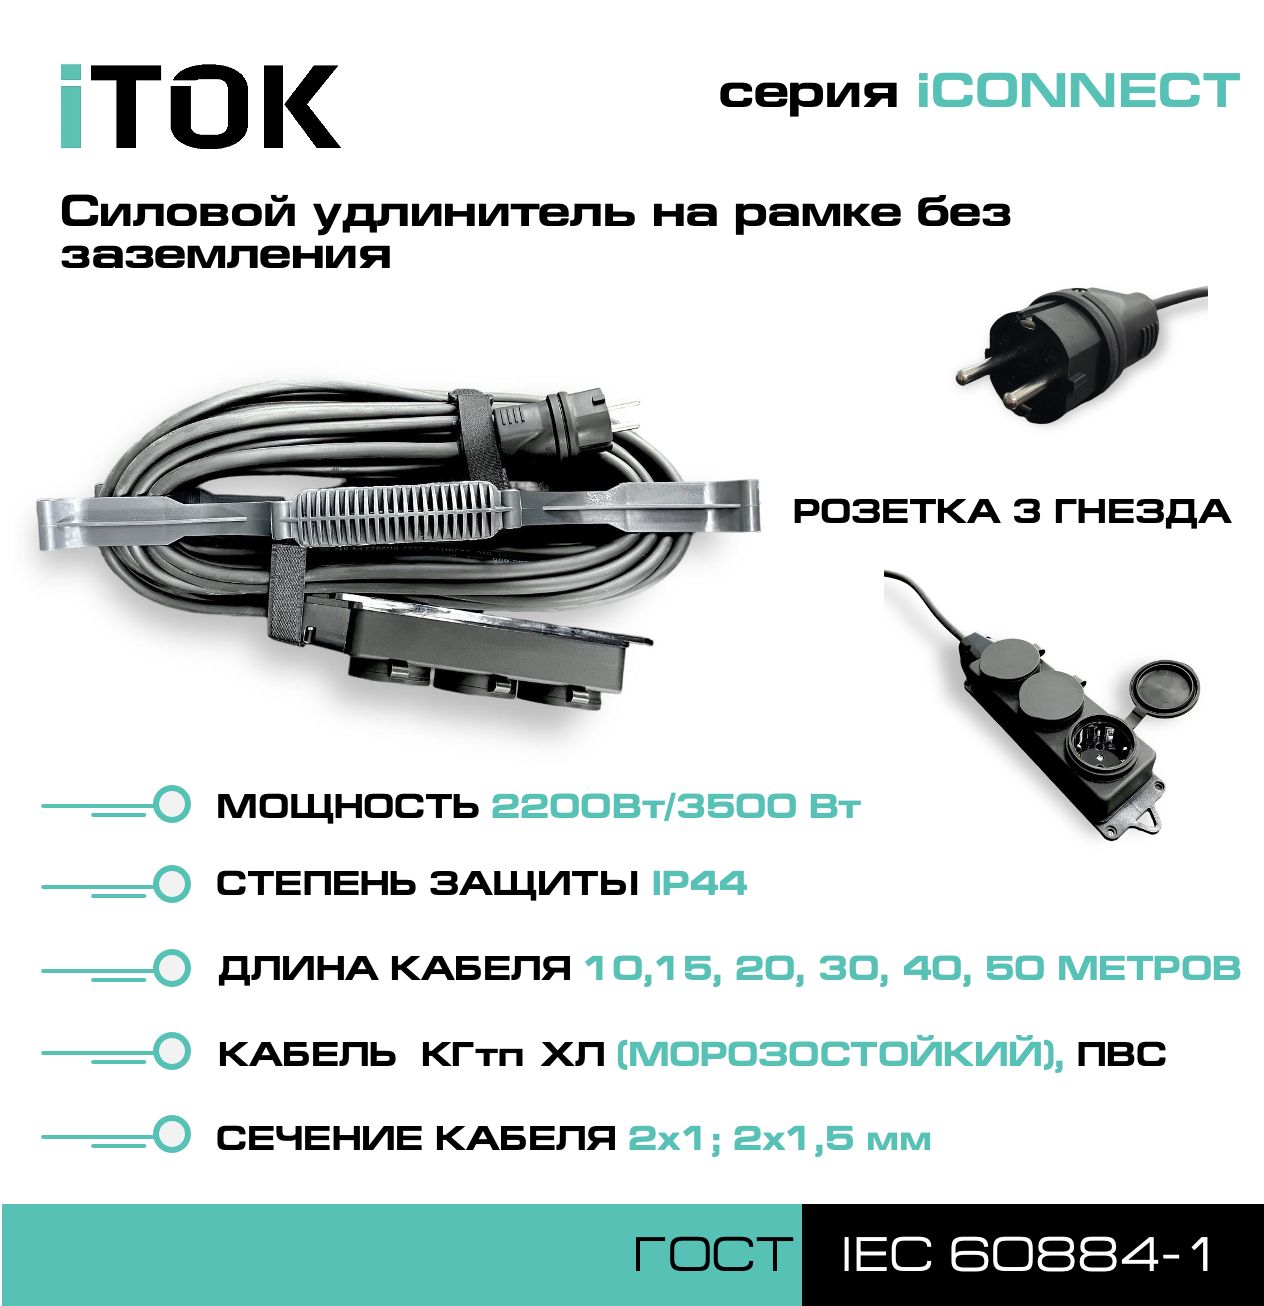 Удлинитель на рамке без земли серии iTOK iCONNECT КГтп-ХЛ 2х1,5 мм 3 гнезда IP44 30 м